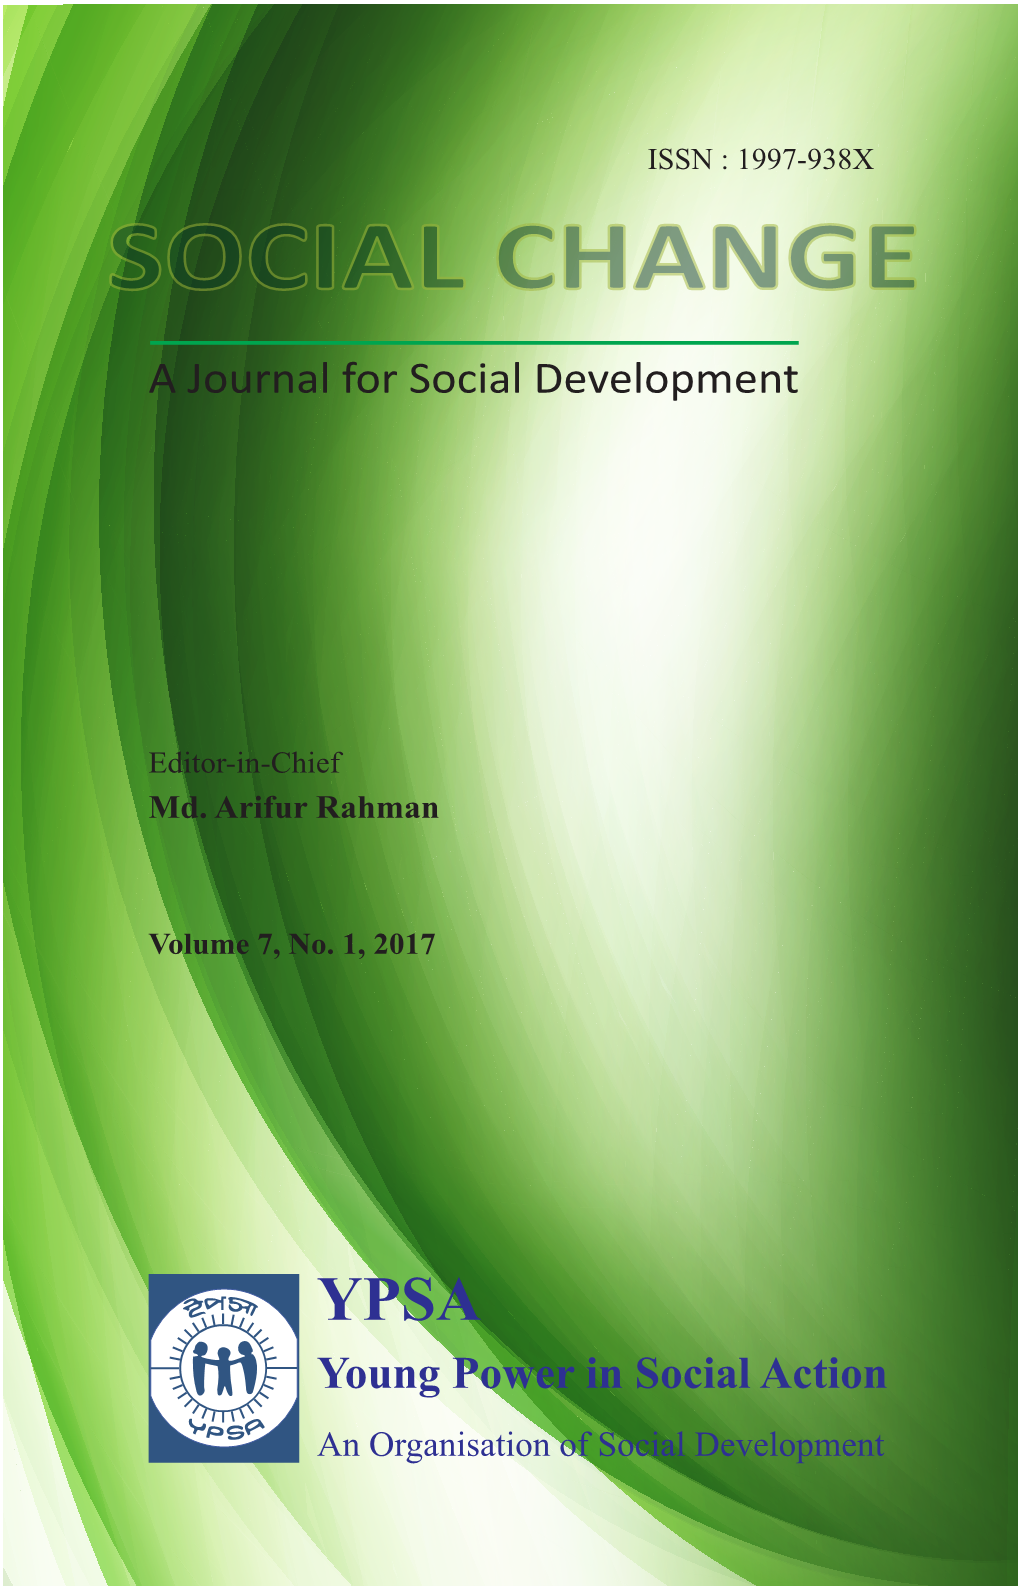 SOCIAL CHANGE a Journal for Social Development